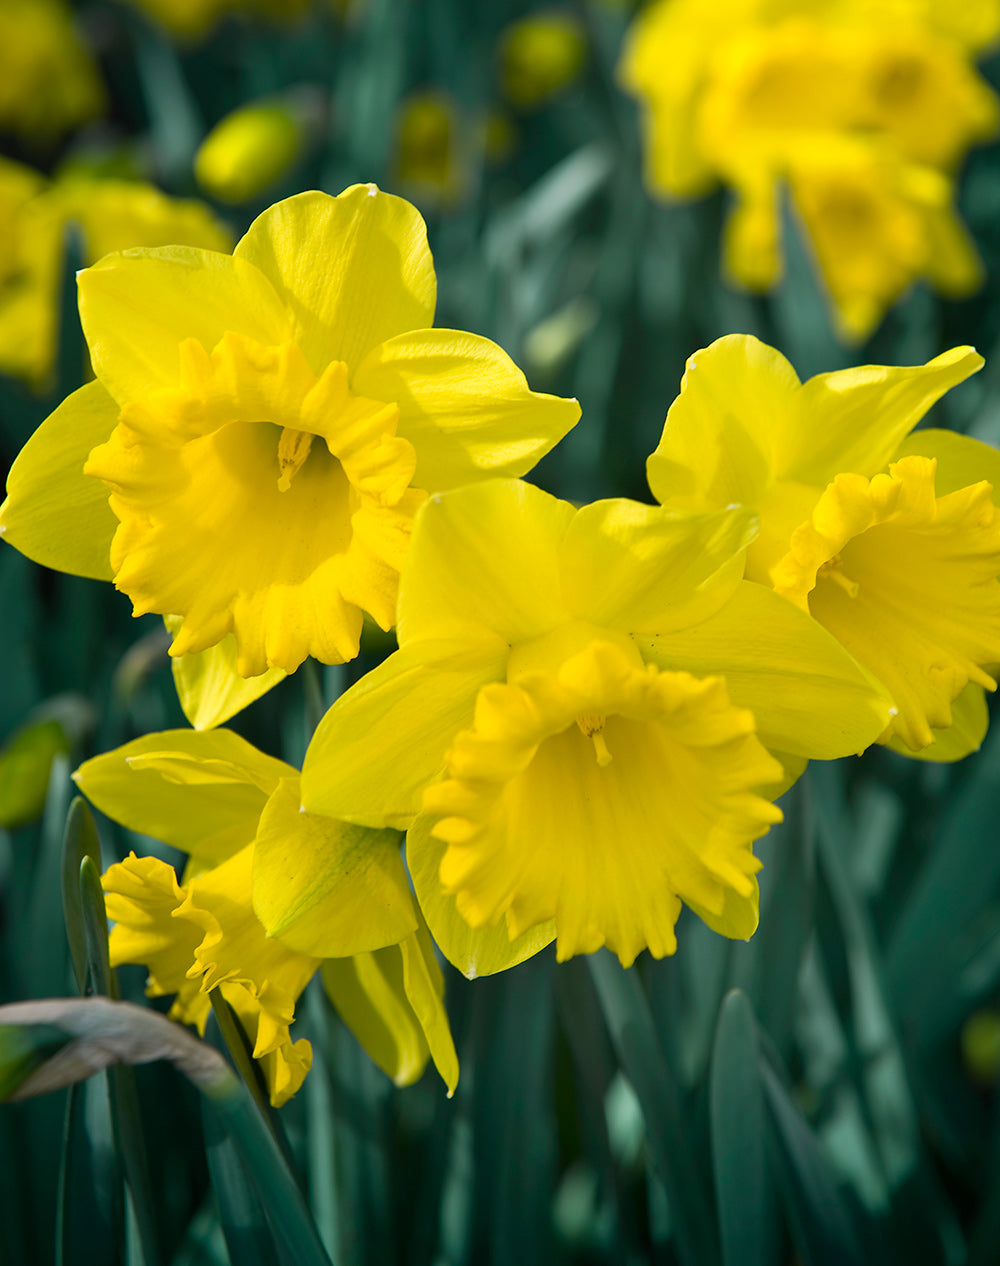 Daffodil Dutch Master Value Pack